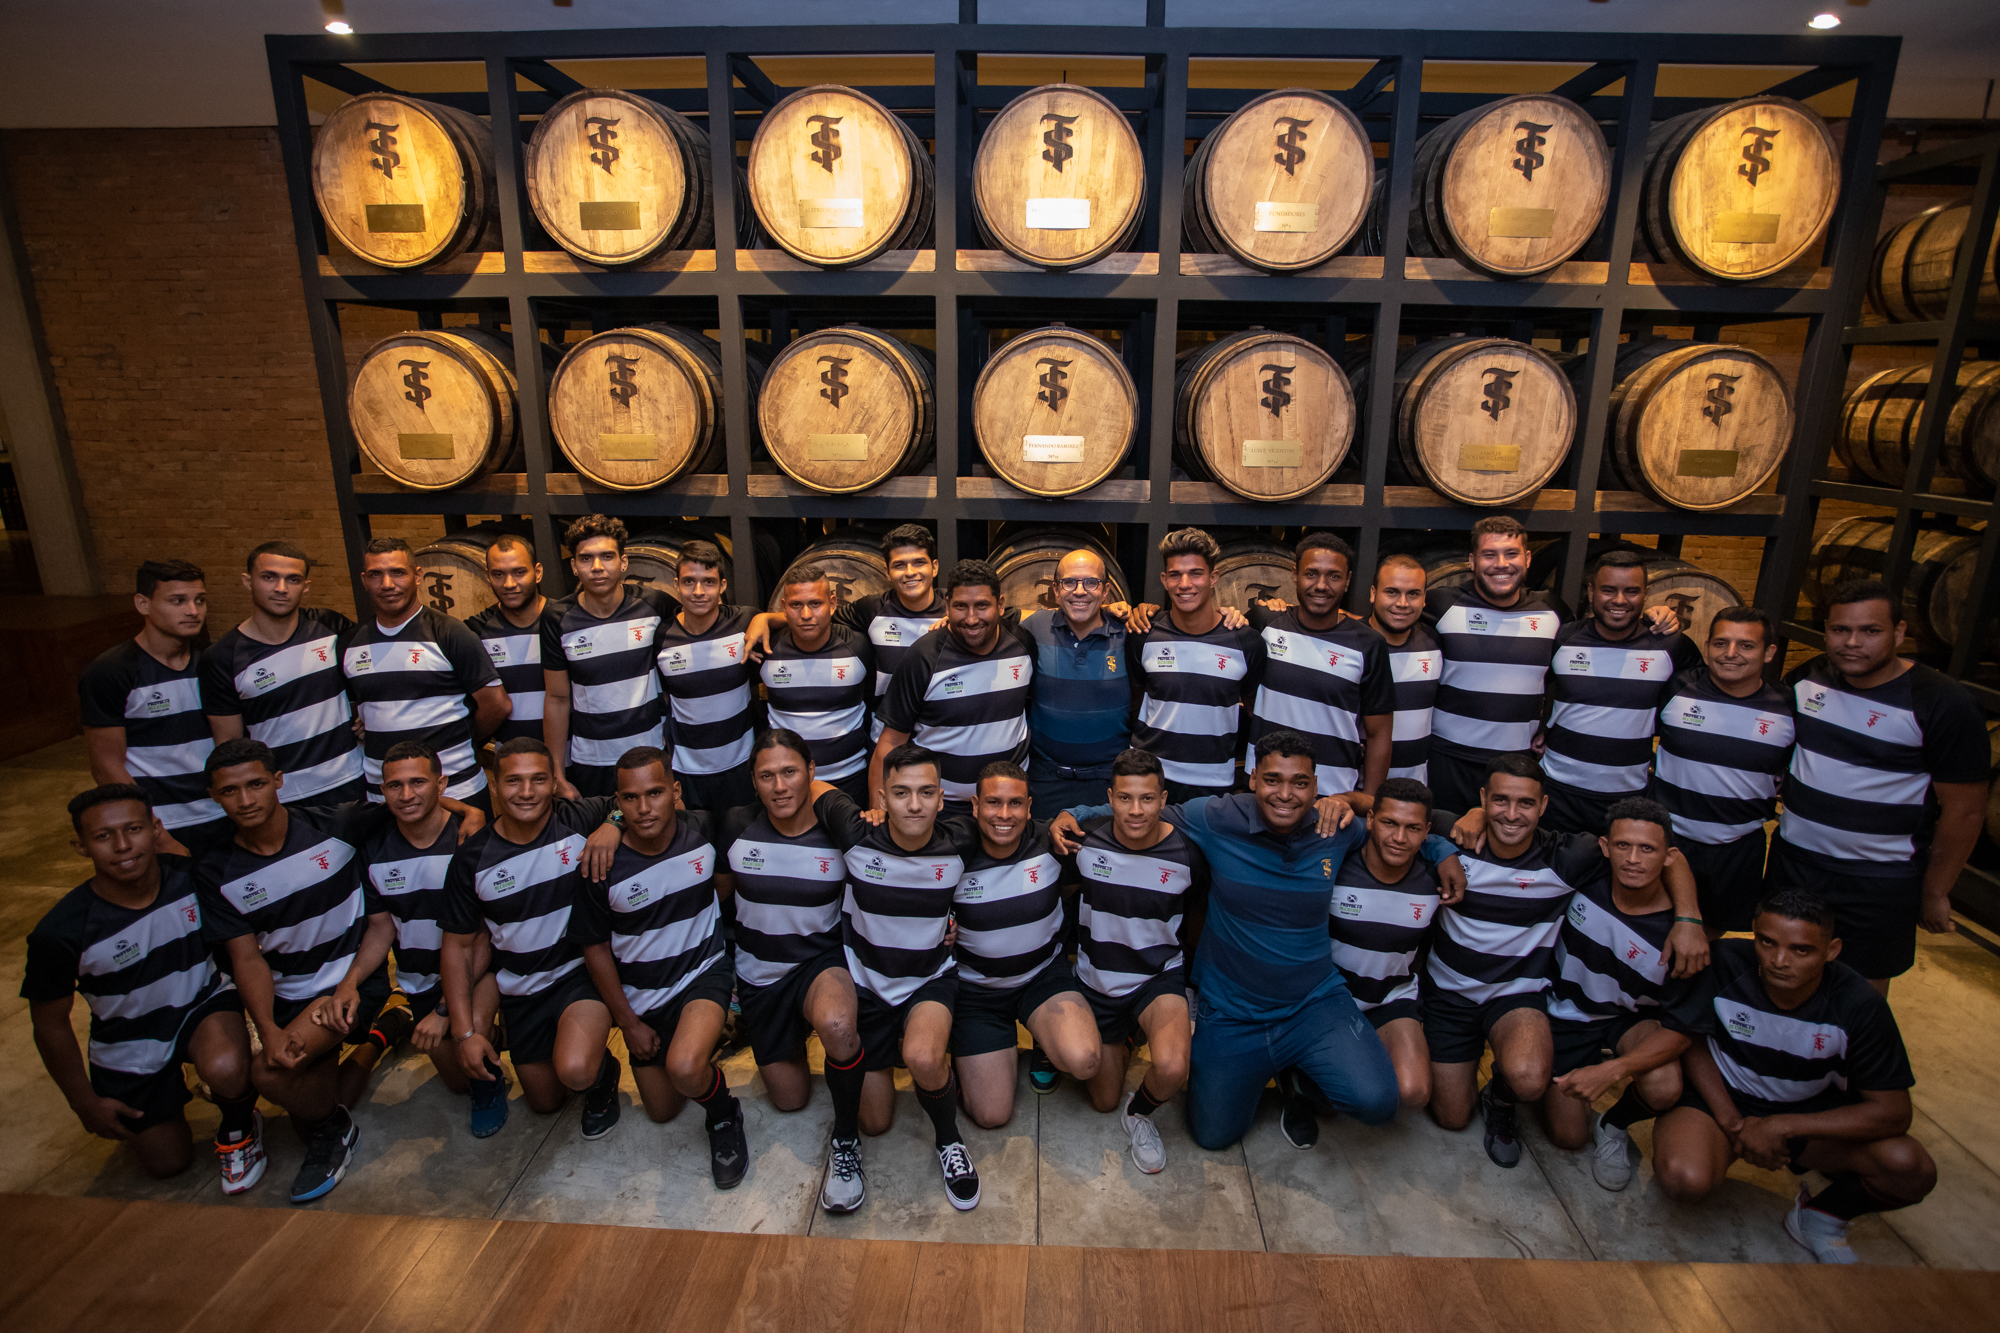 Alcatraz Rugby Club